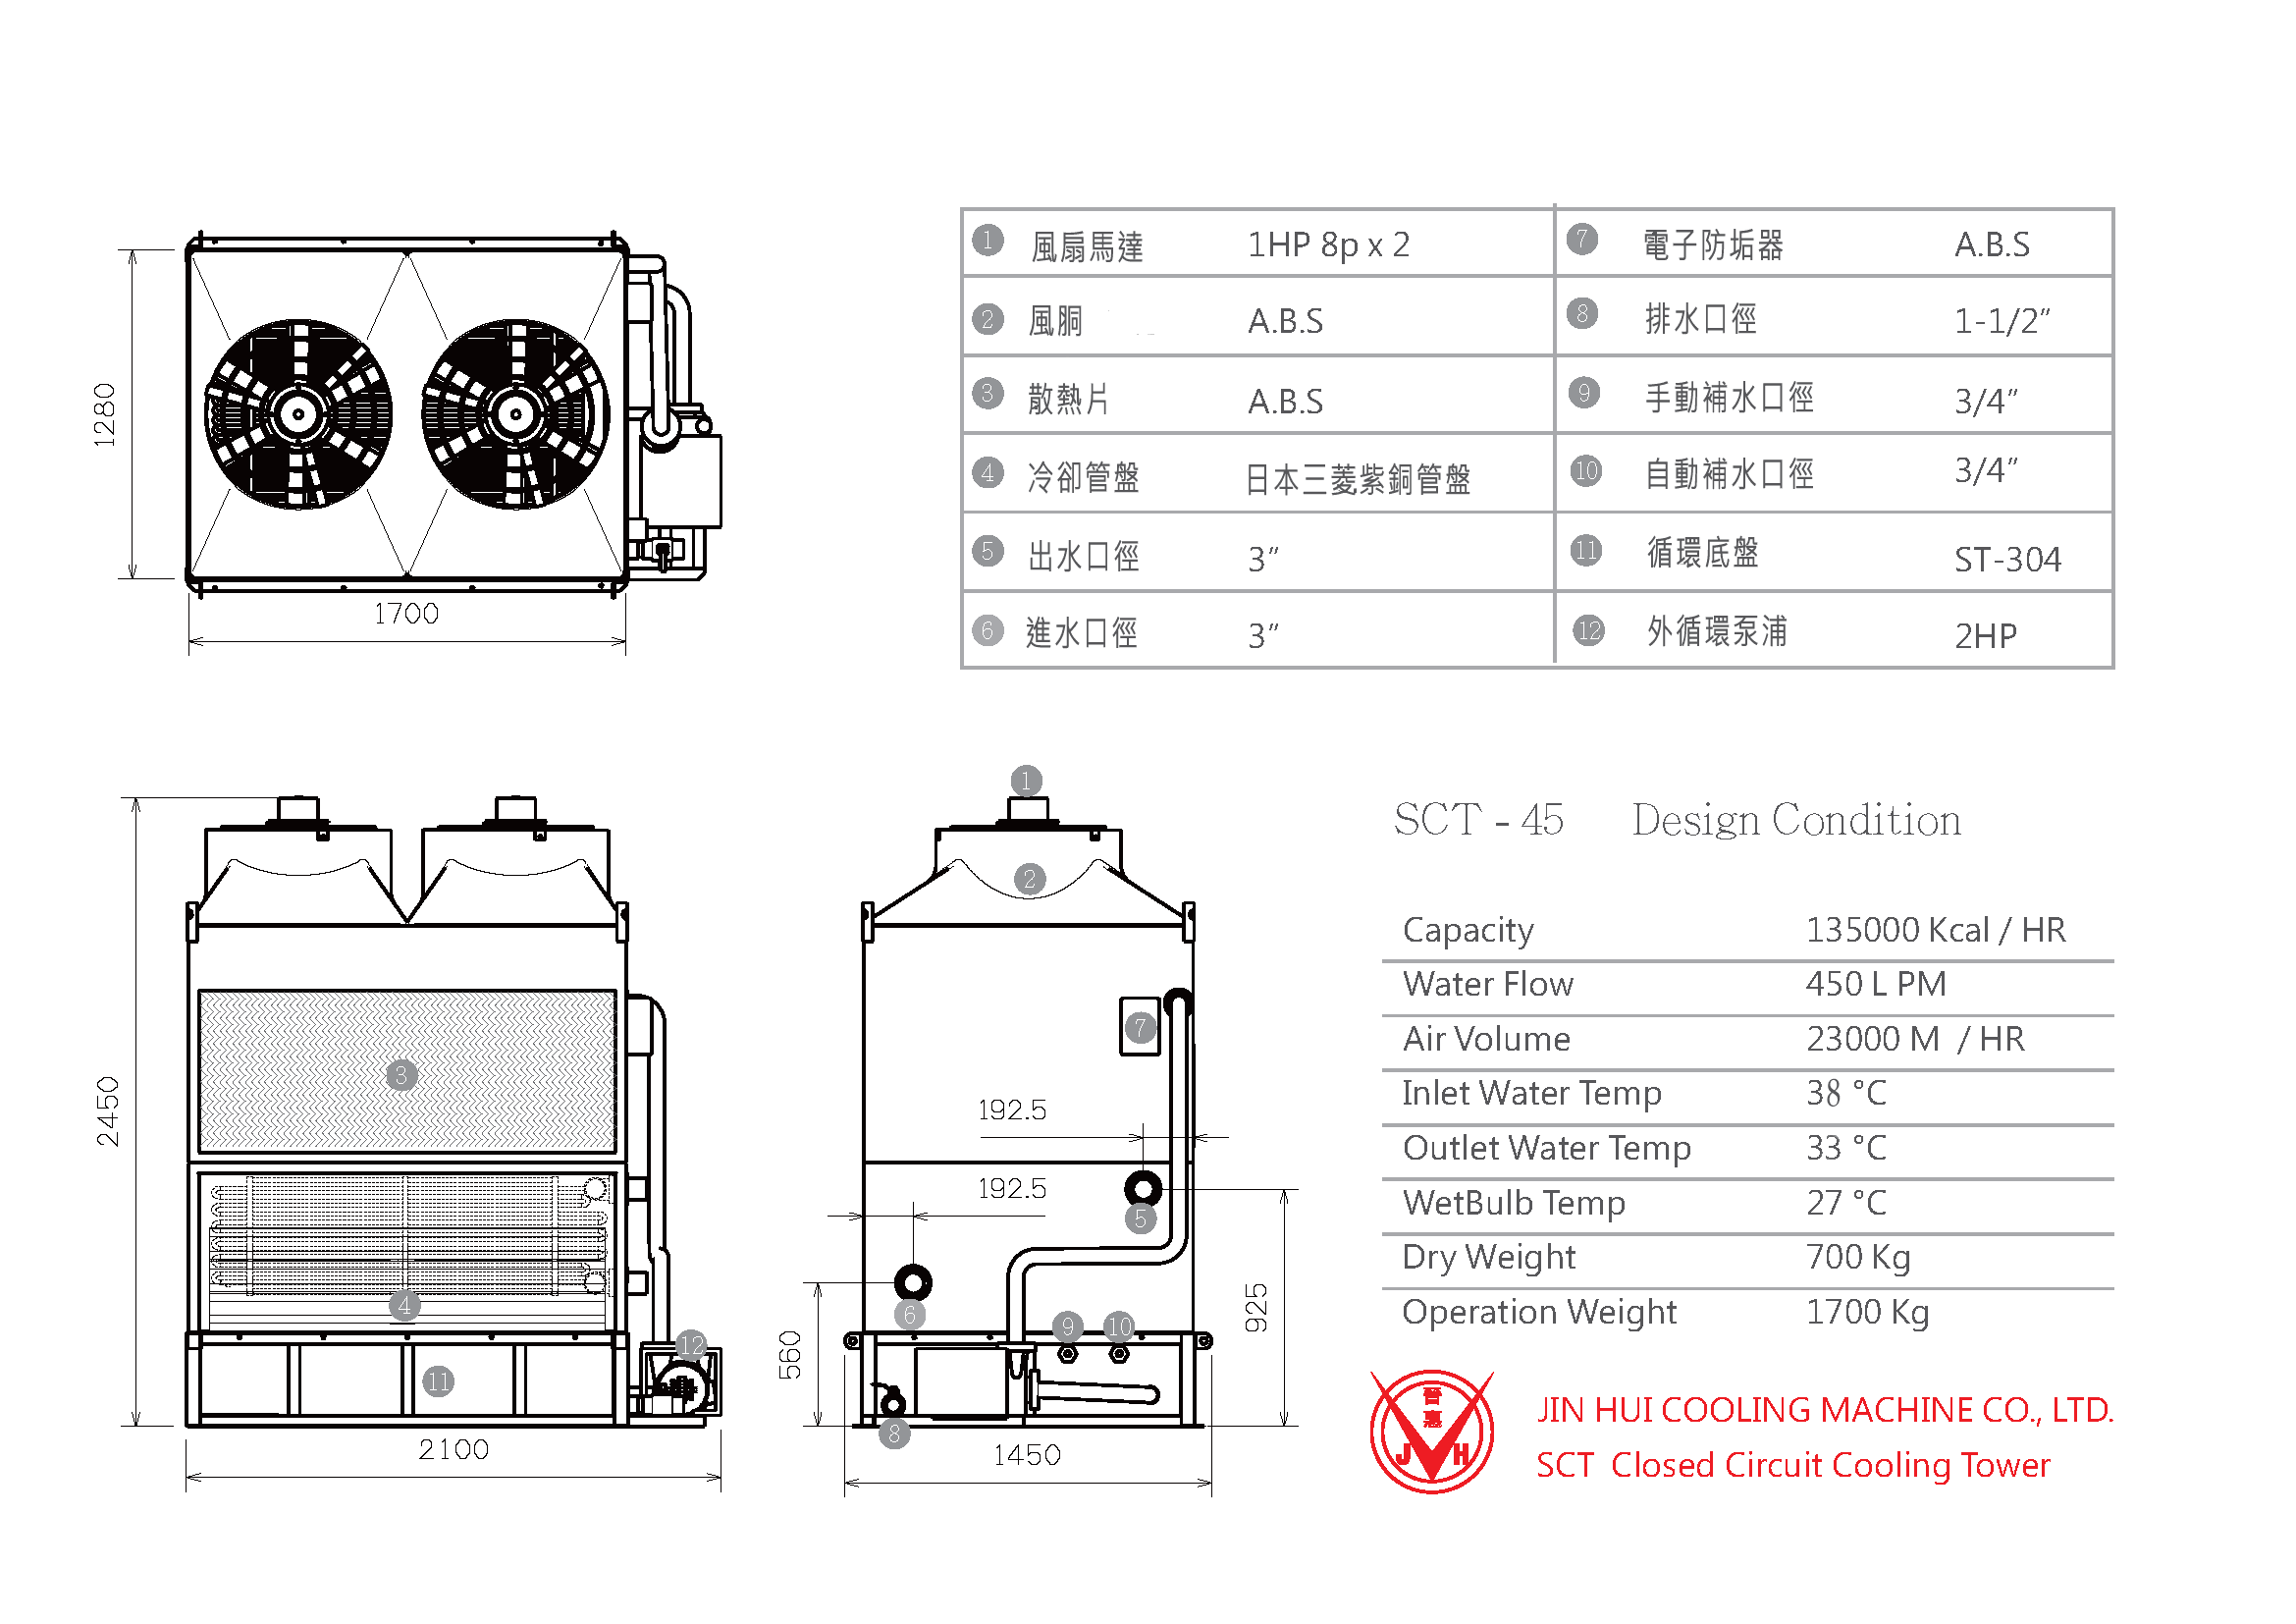 SCT-45 Design Condition